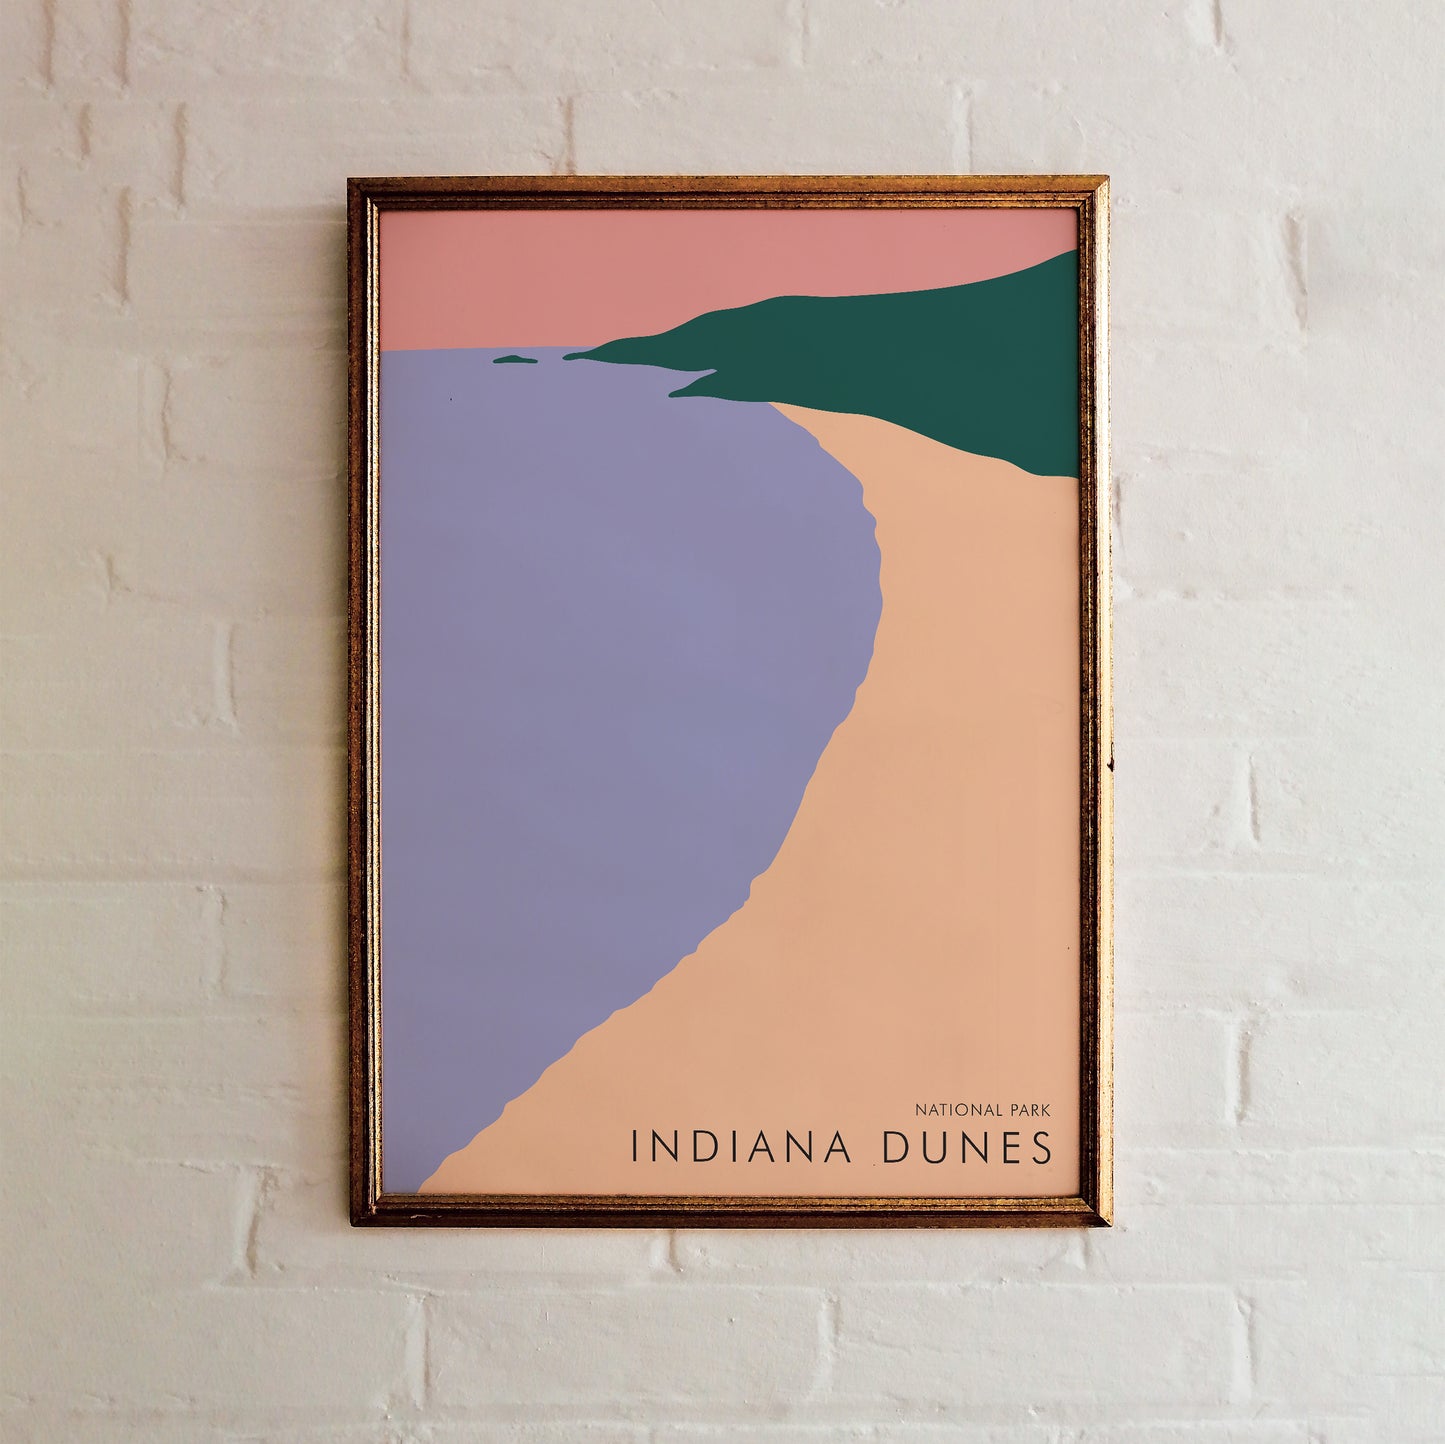 Indiana Dunes, National Park Poster